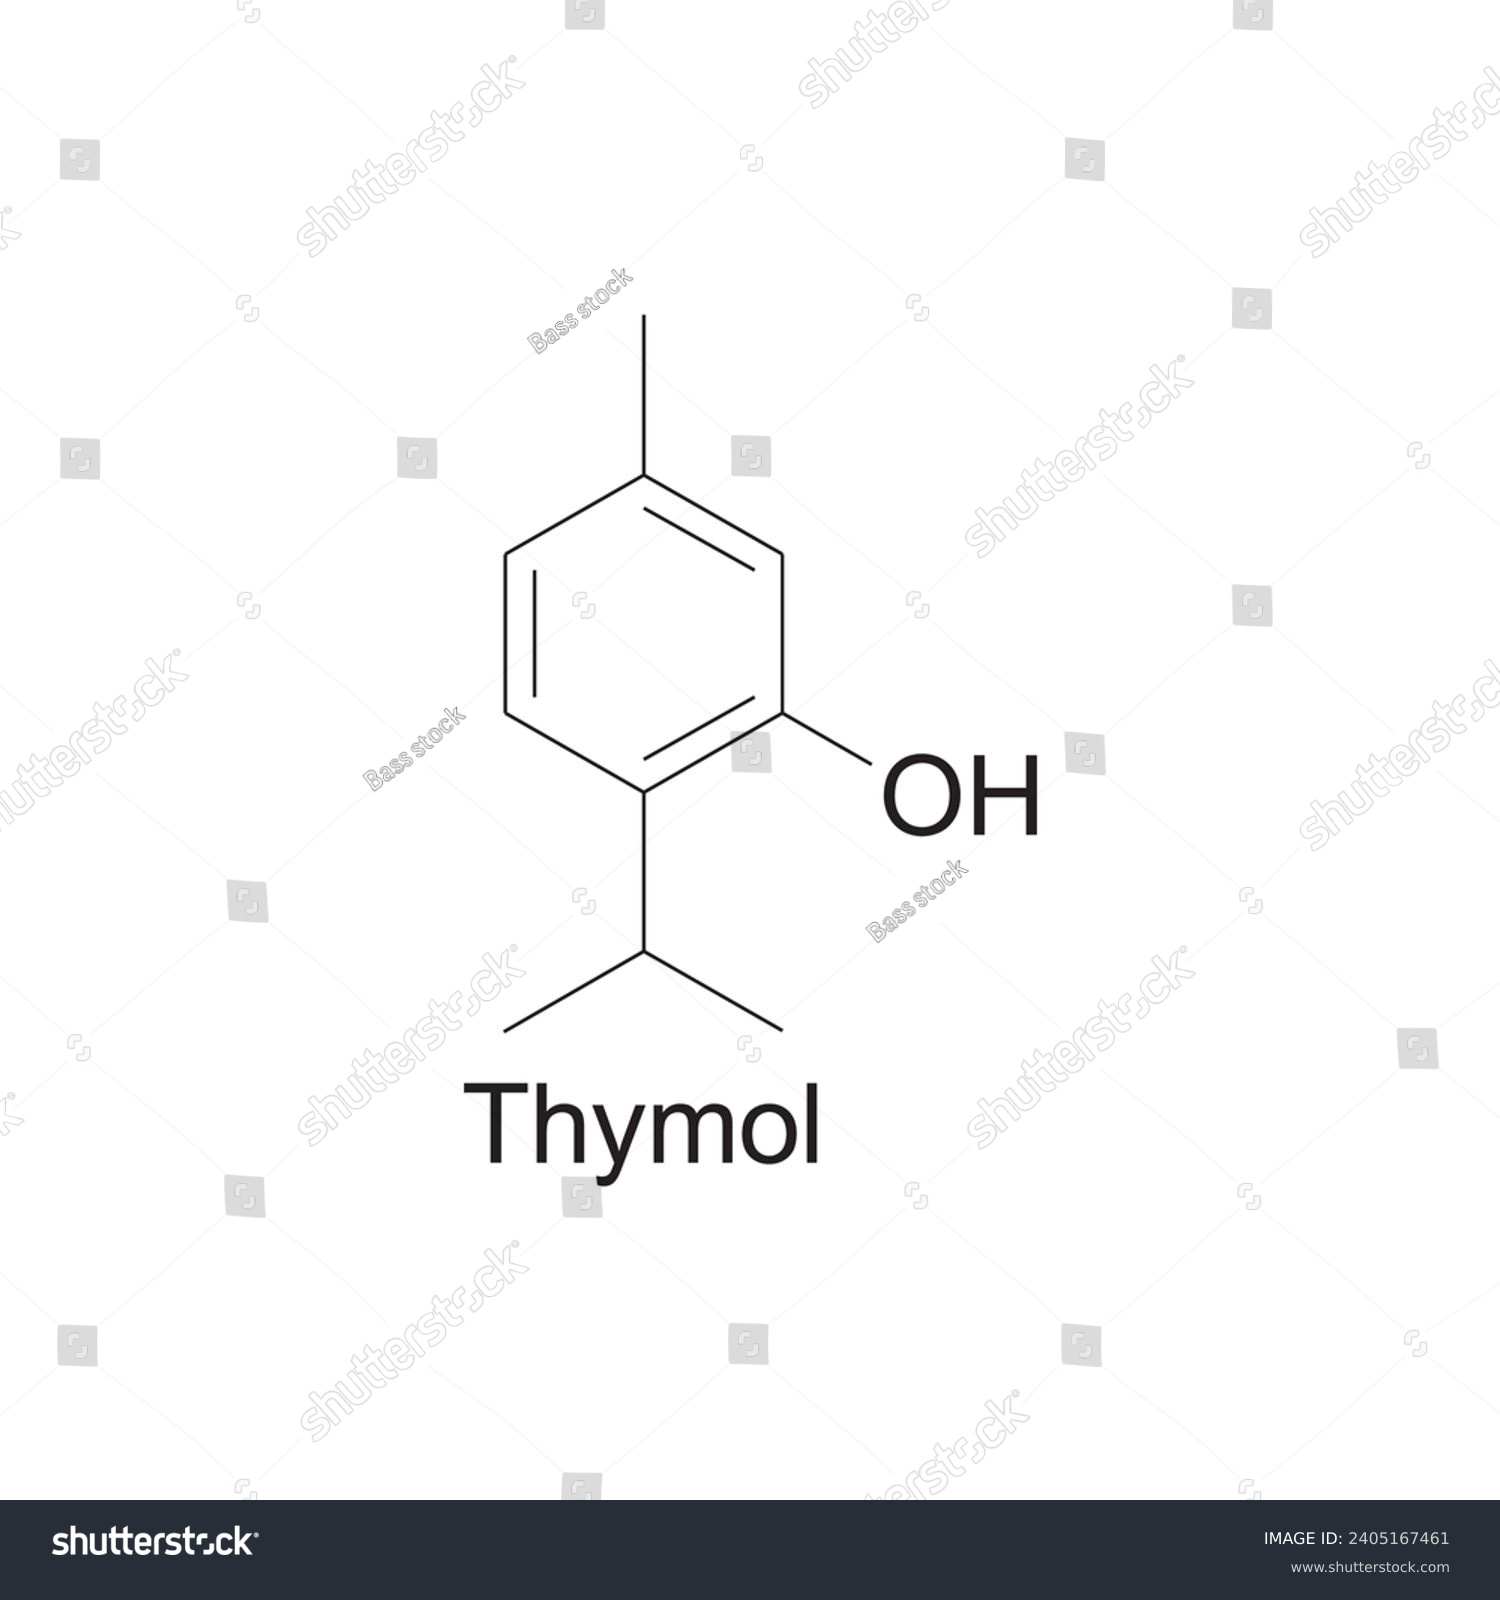 Thymol skeletal structure diagram.Monoterpenoid compound molecule scientific illustration on white background. #2405167461